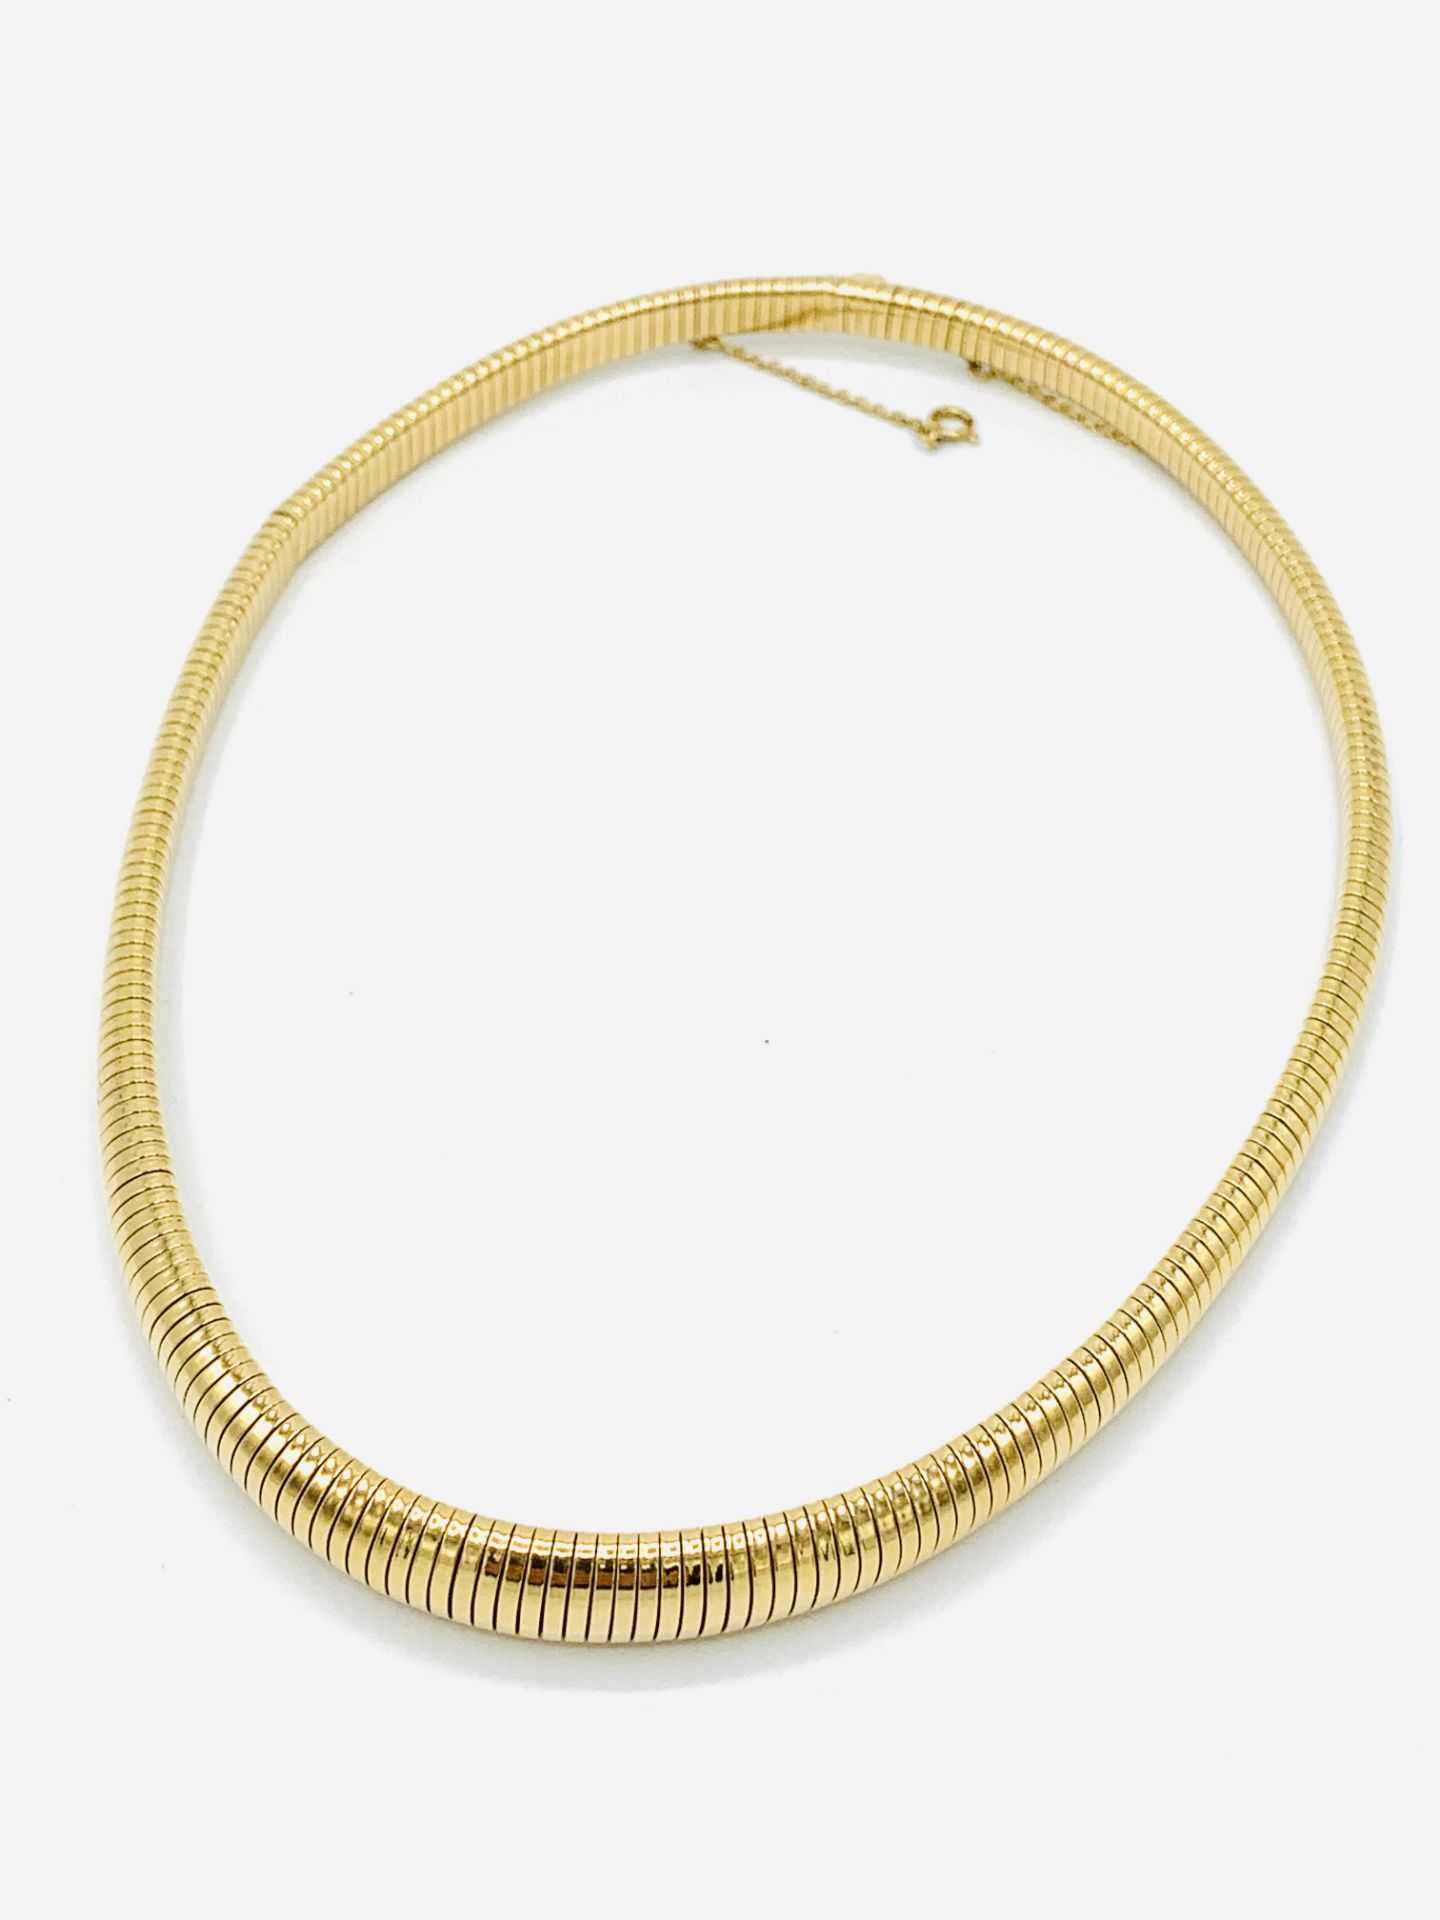 18ct gold turbogaz collar necklace.